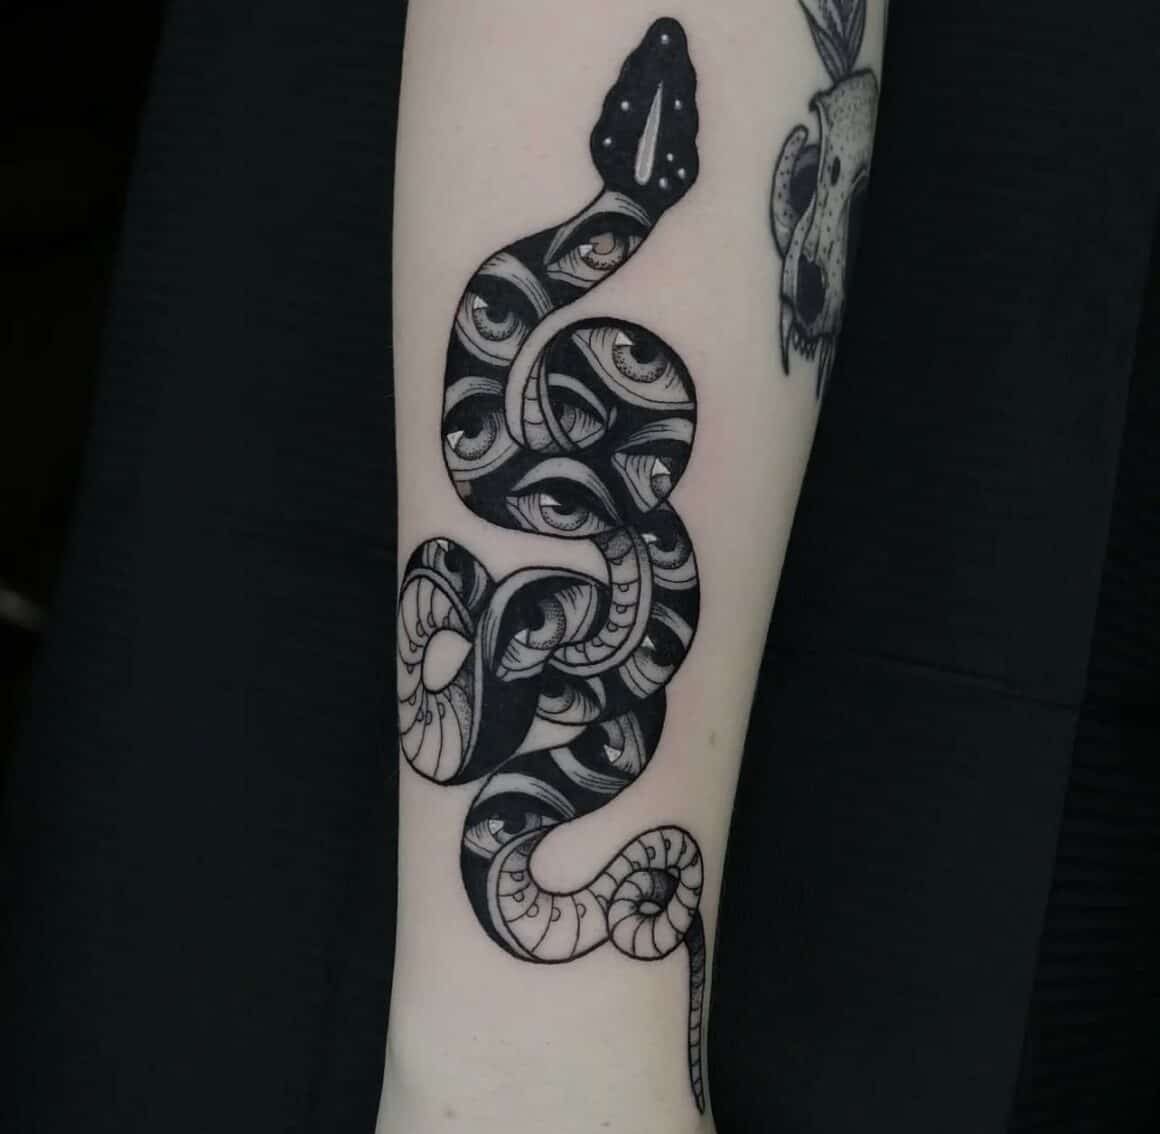 two #headed #snake #tattoo two heade🤓🤕😓d snake tattoo | TikTok